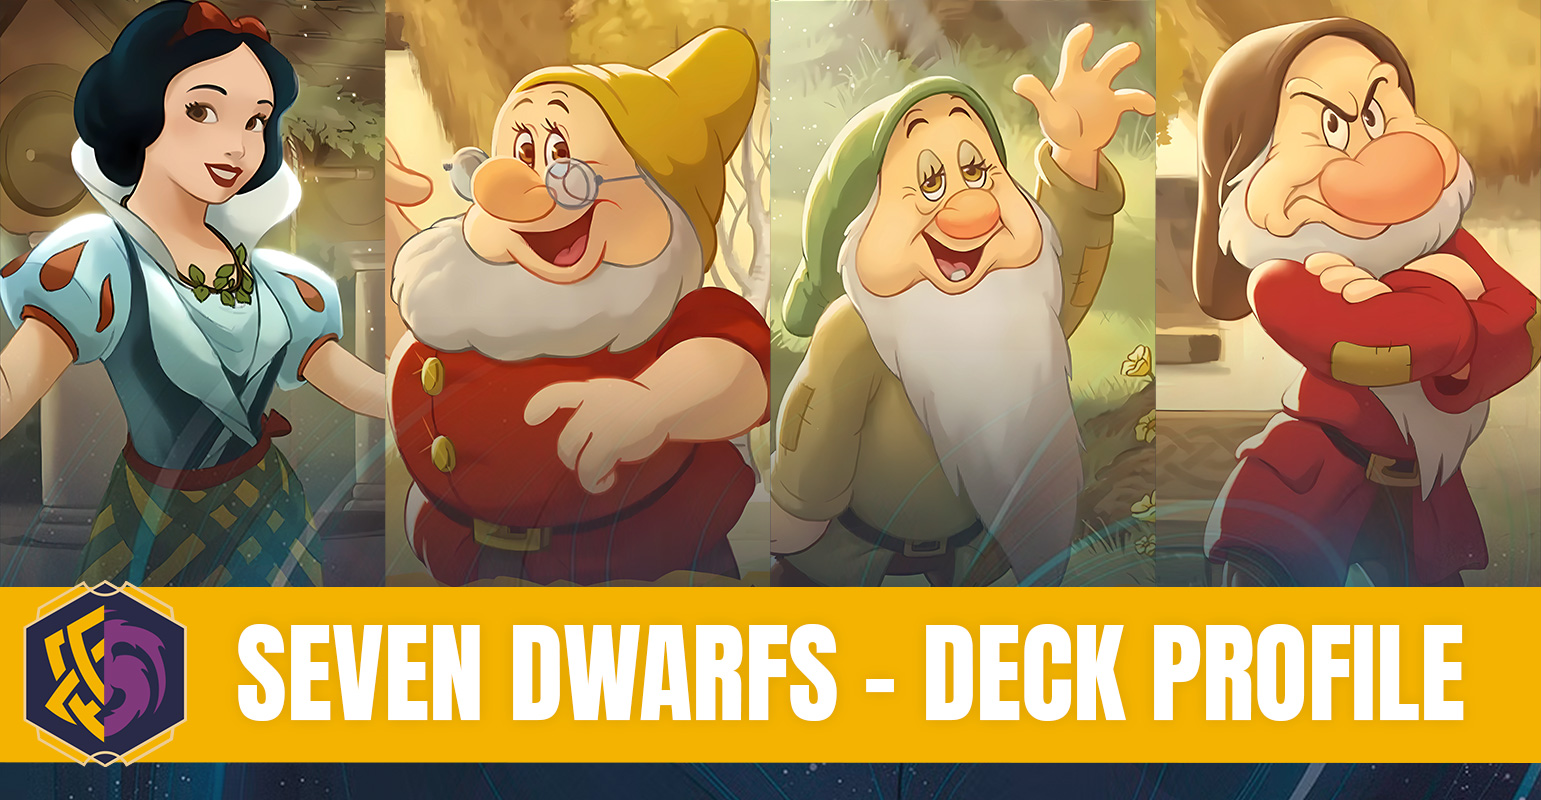 Seven Dwarfs - Deck Profile (Amber/Amethyst) by LaserGaming